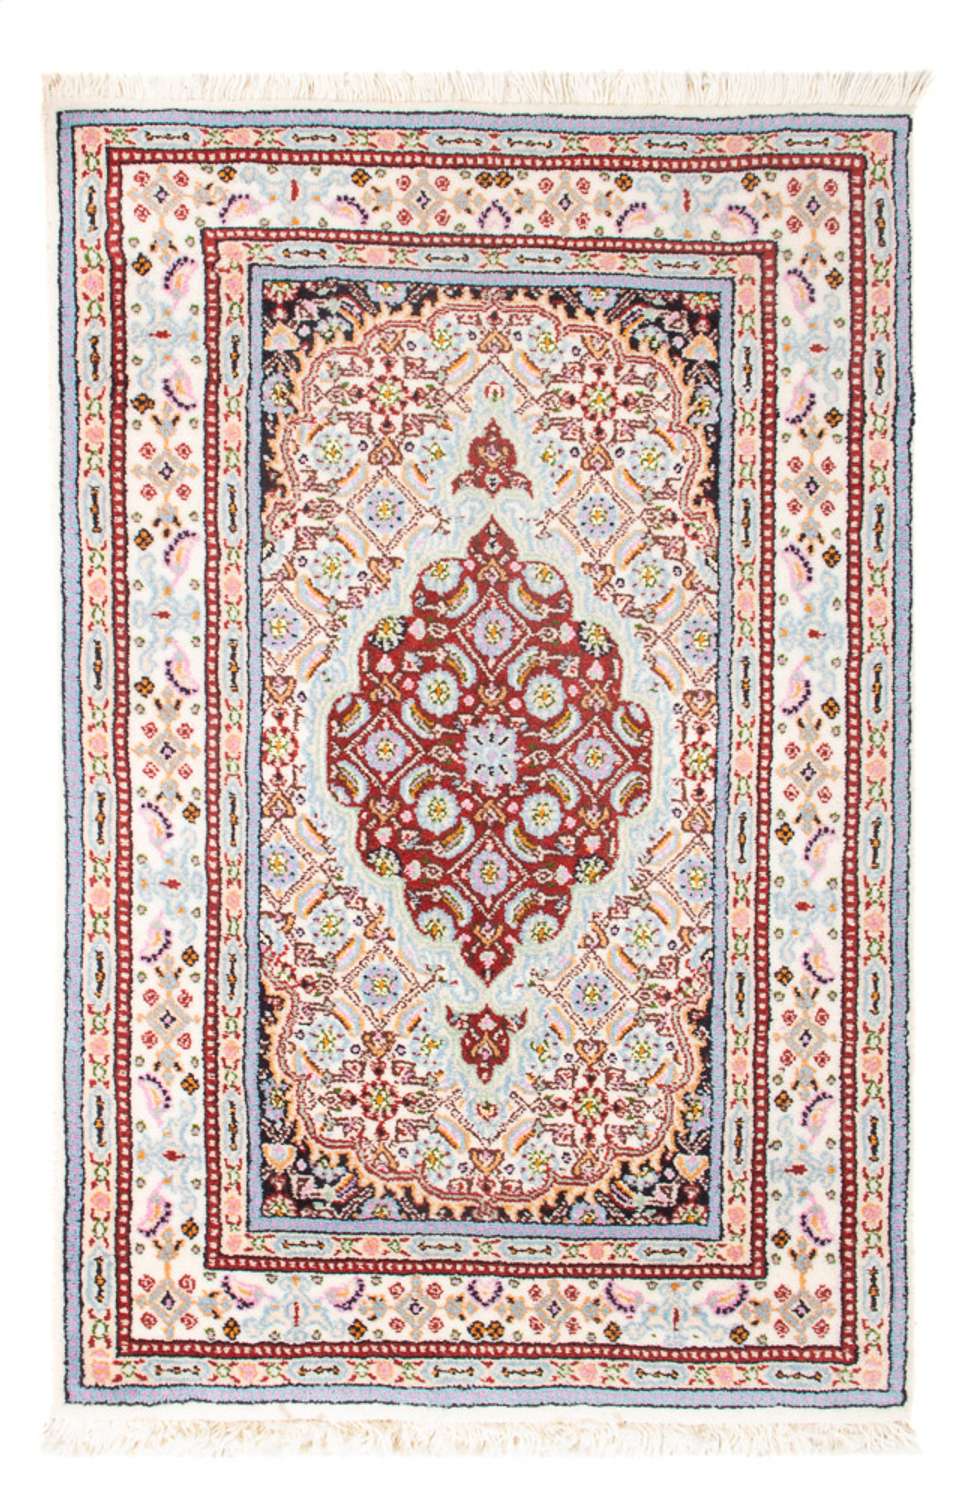 Perzisch tapijt - Klassiek - Koninklijke - 90 x 60 cm - rood